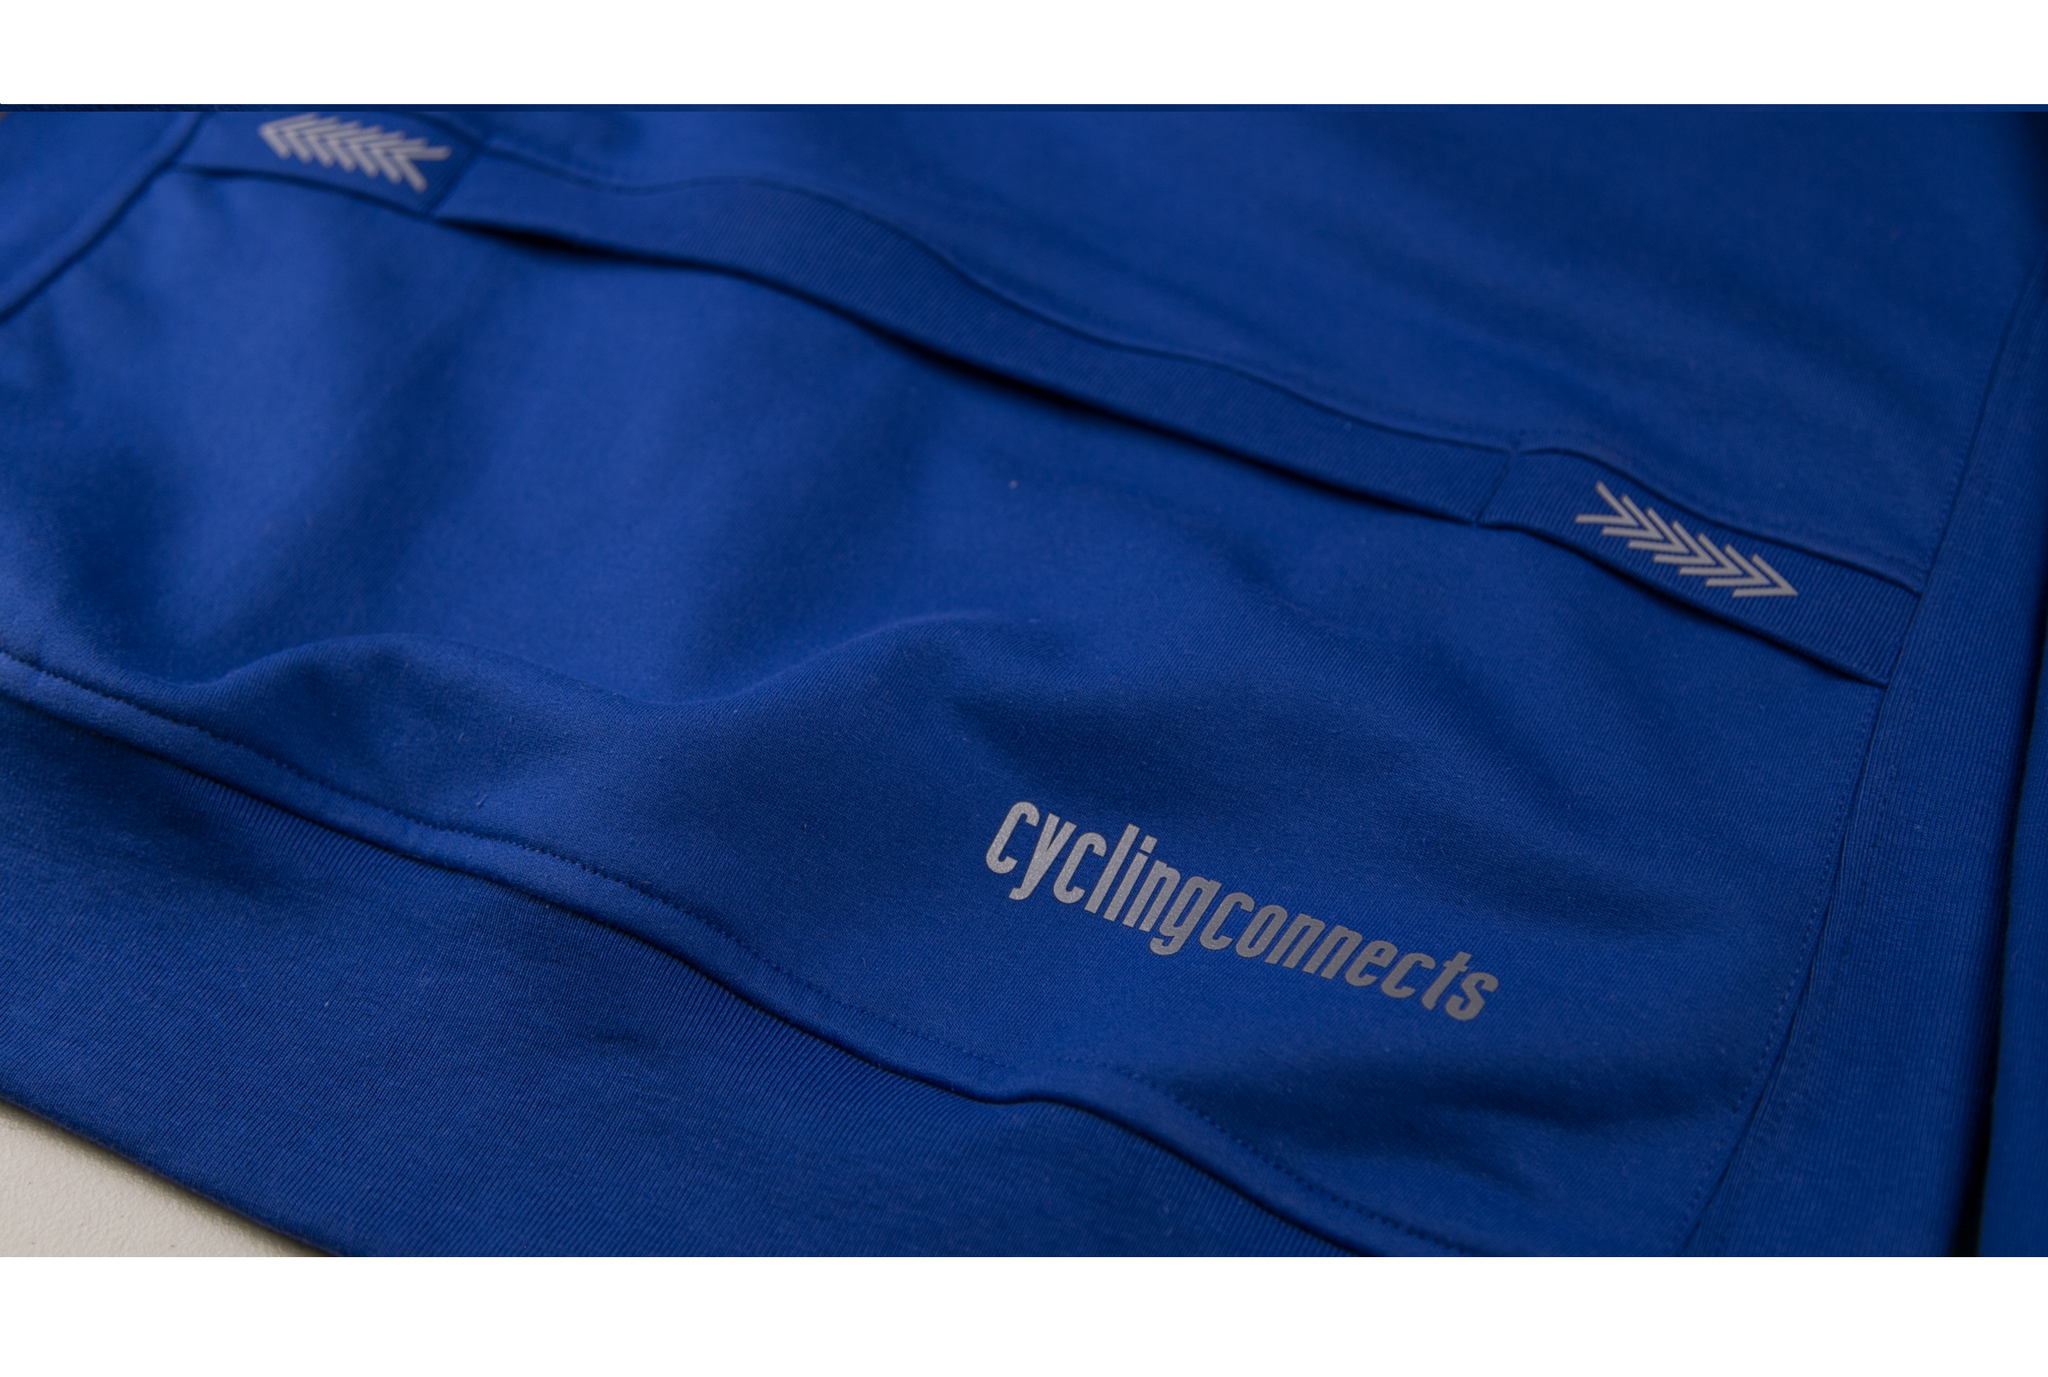 Cycling Sweatshirt (Reflective) - Royal Blue